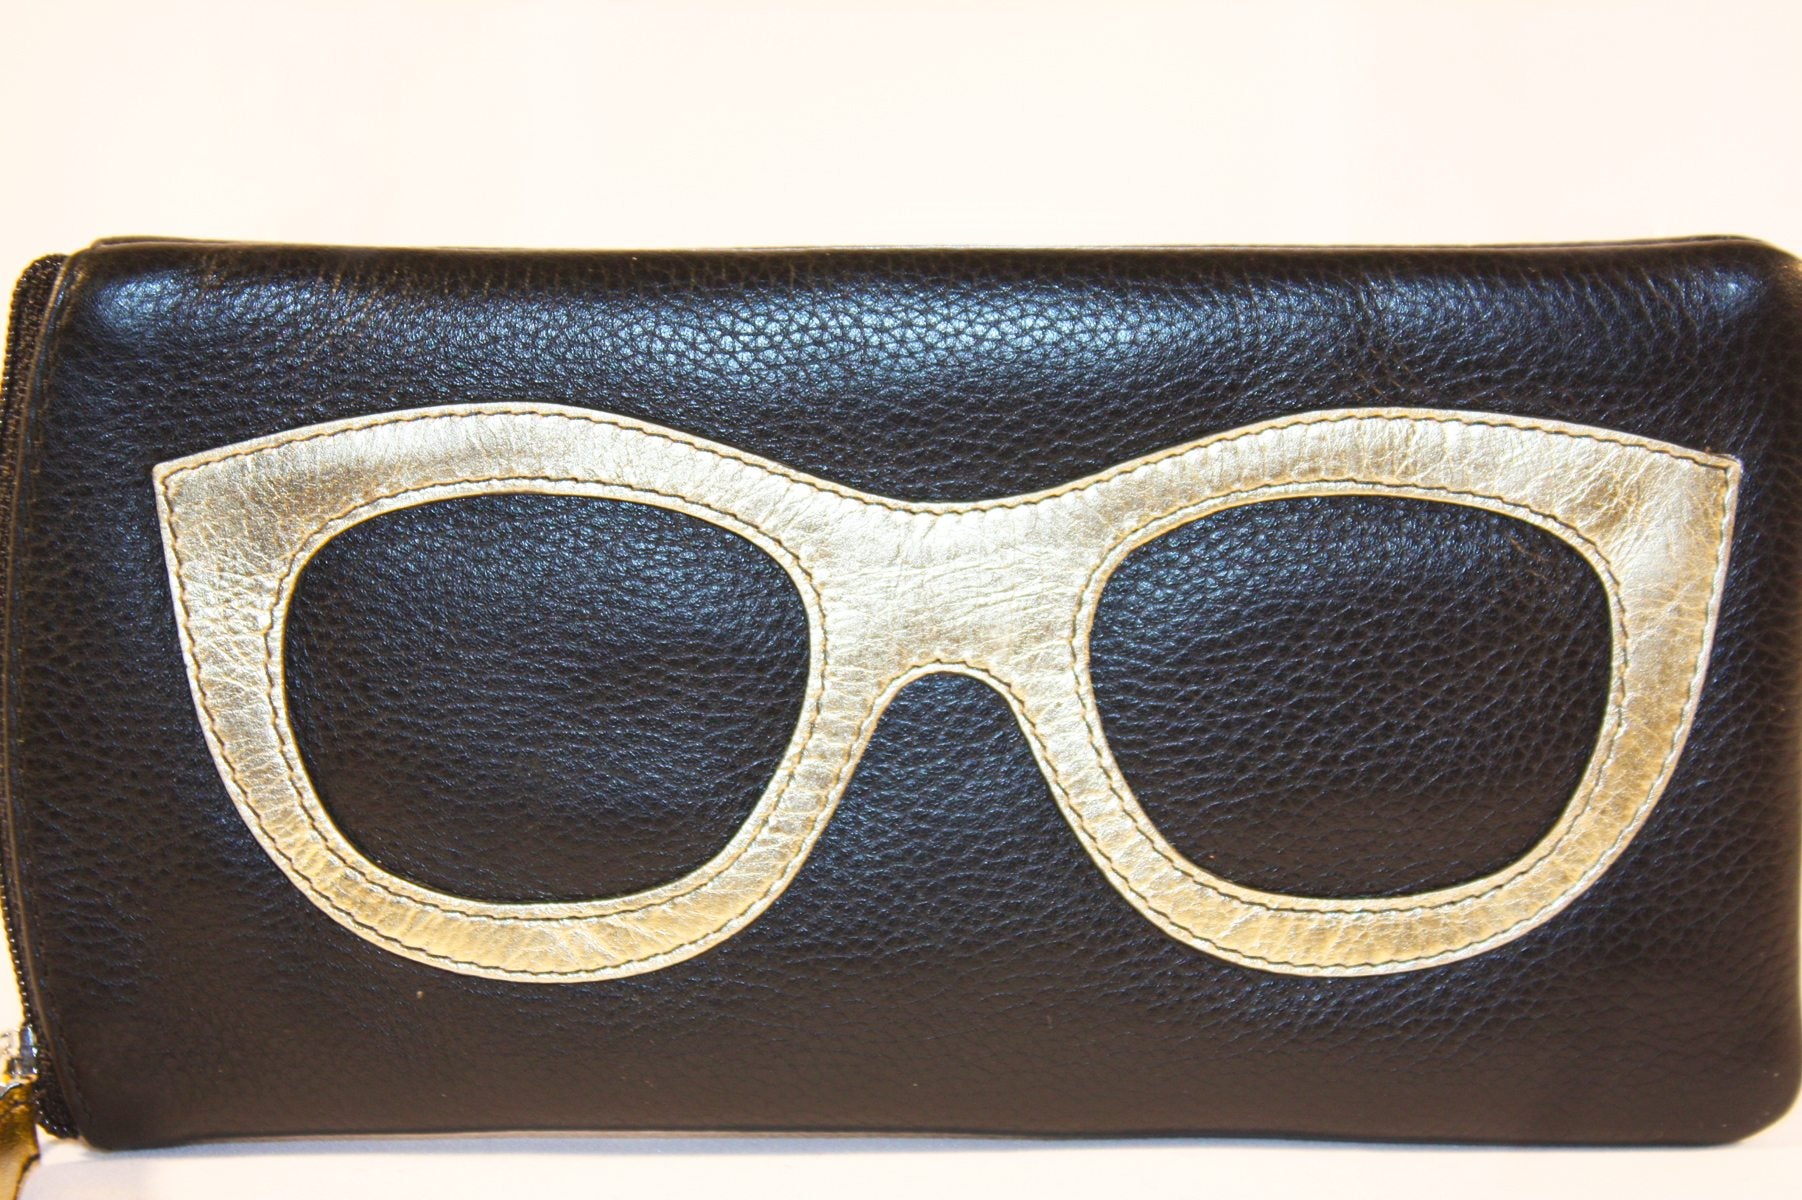 Leather Sunglasses Case - Black